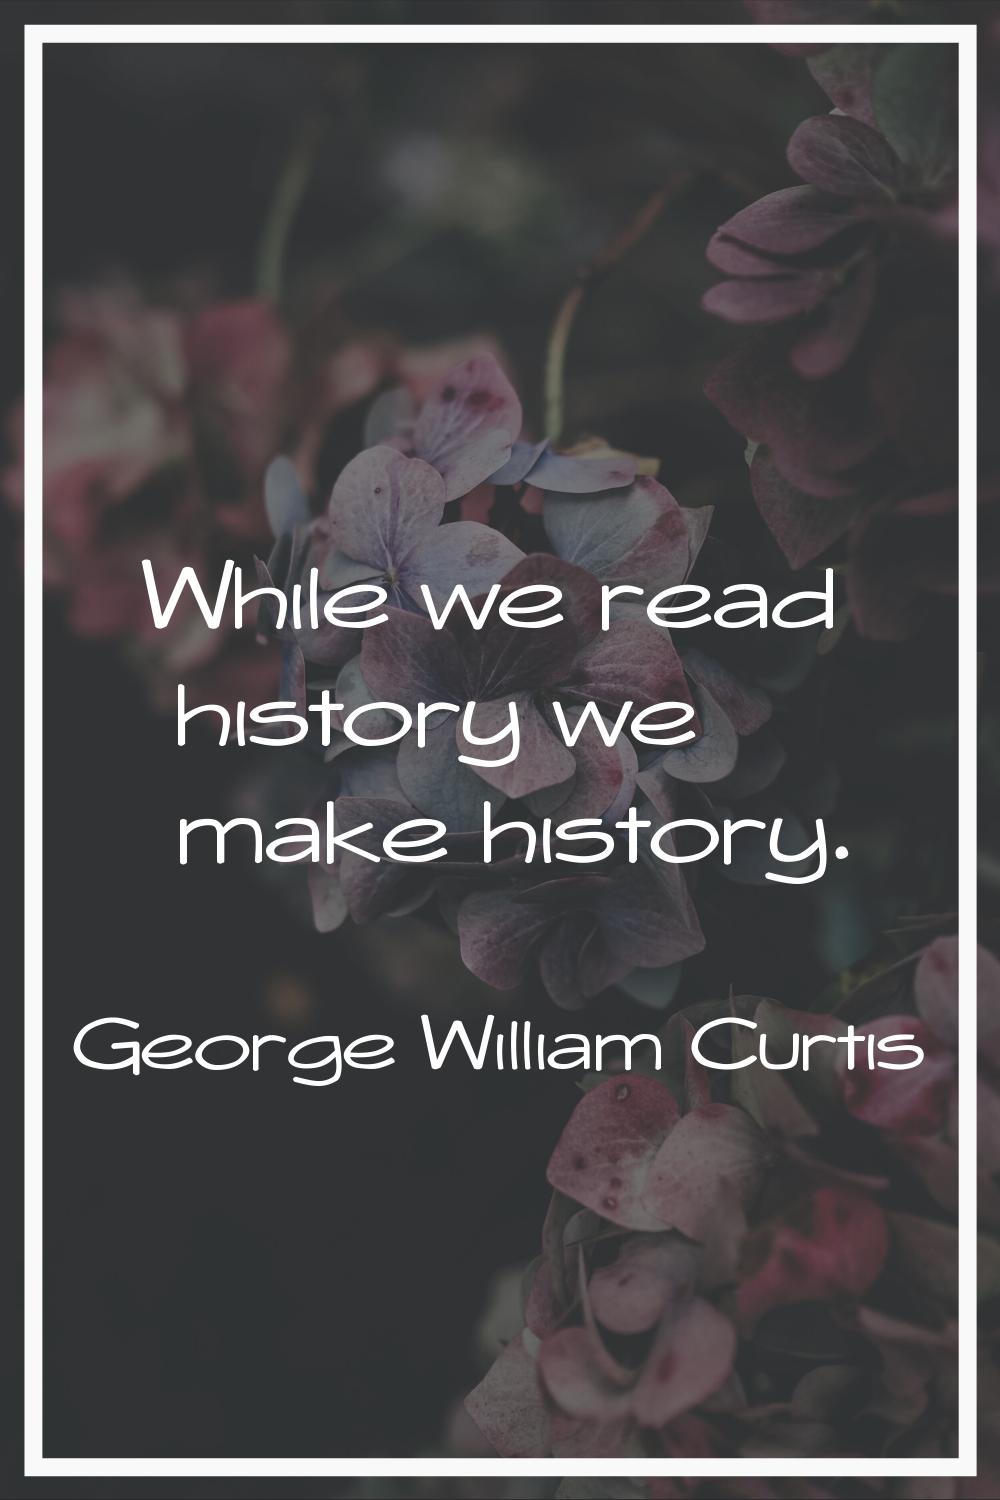 While we read history we make history.